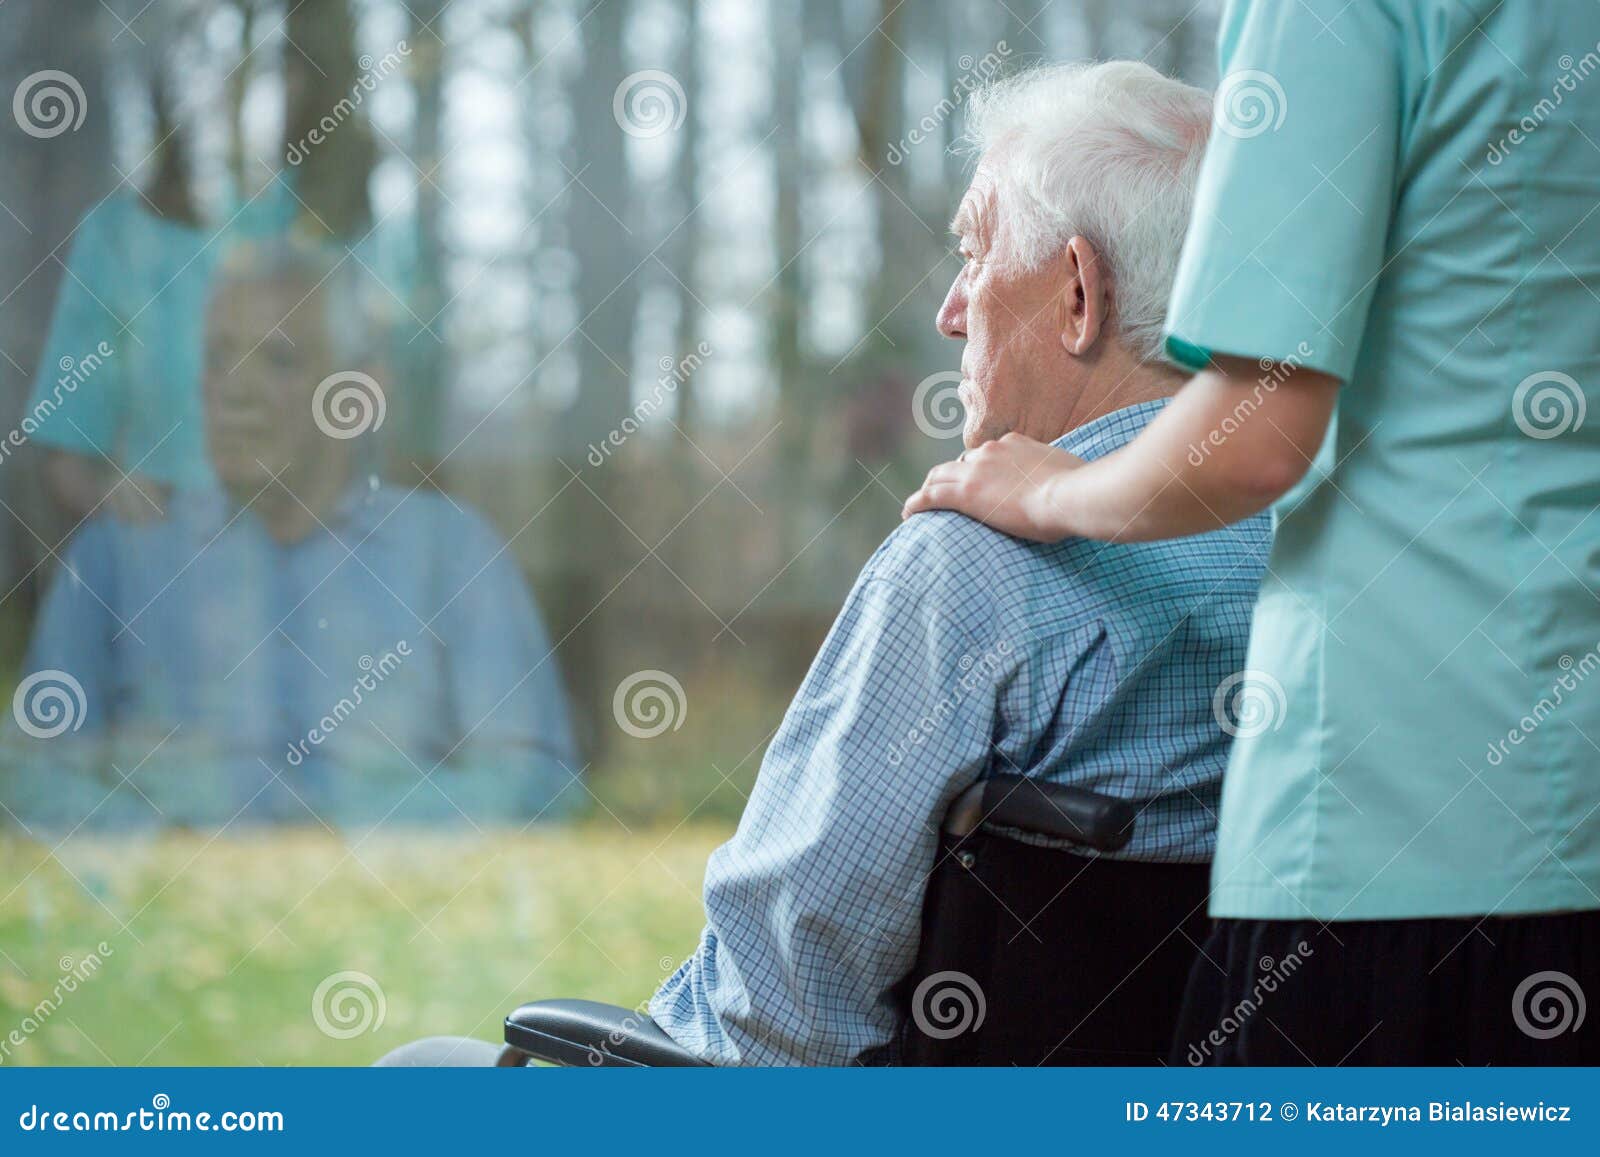 nurse assisting senior man